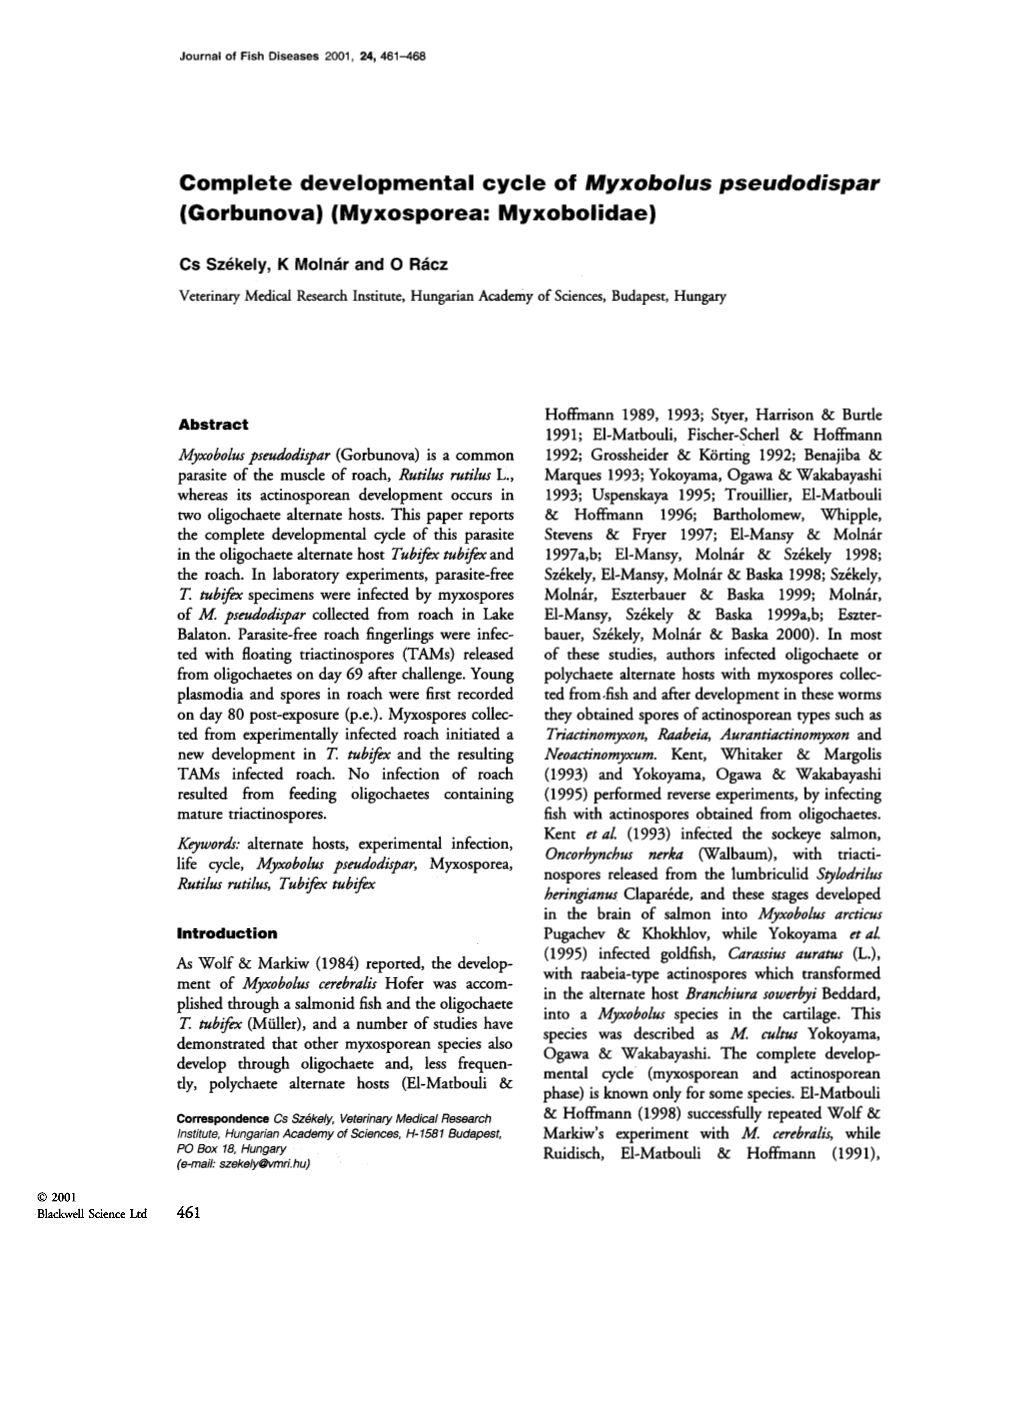 Complete Developmental Cycle of Myxobolus Pseudodispar (Gorbunova) (Myxosporea: Myxobolidae)